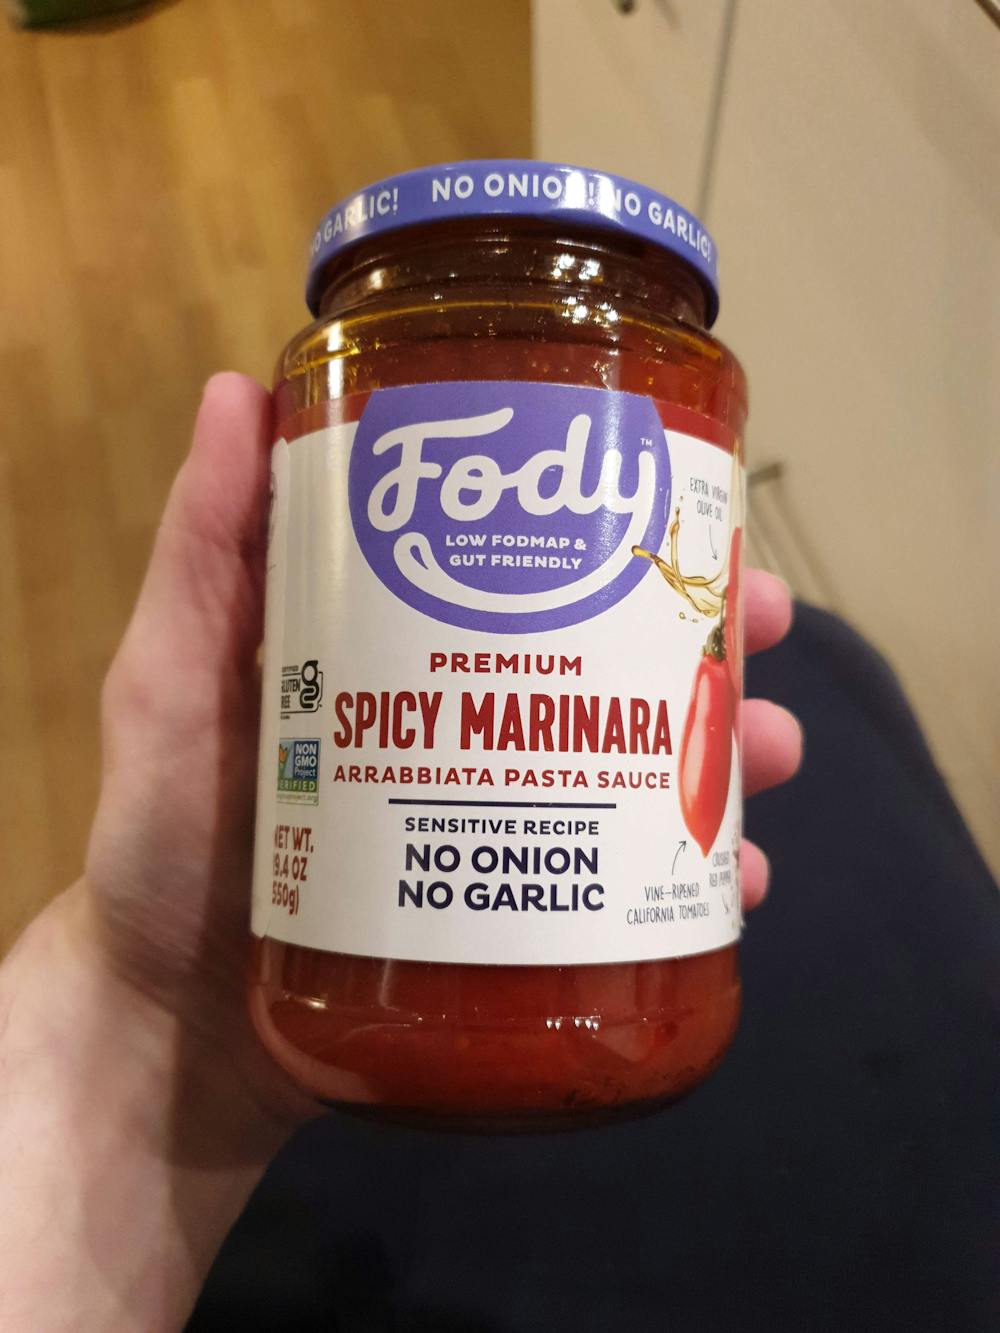 Premium spicy marinara, arrabbiata pasta sauce, Fody